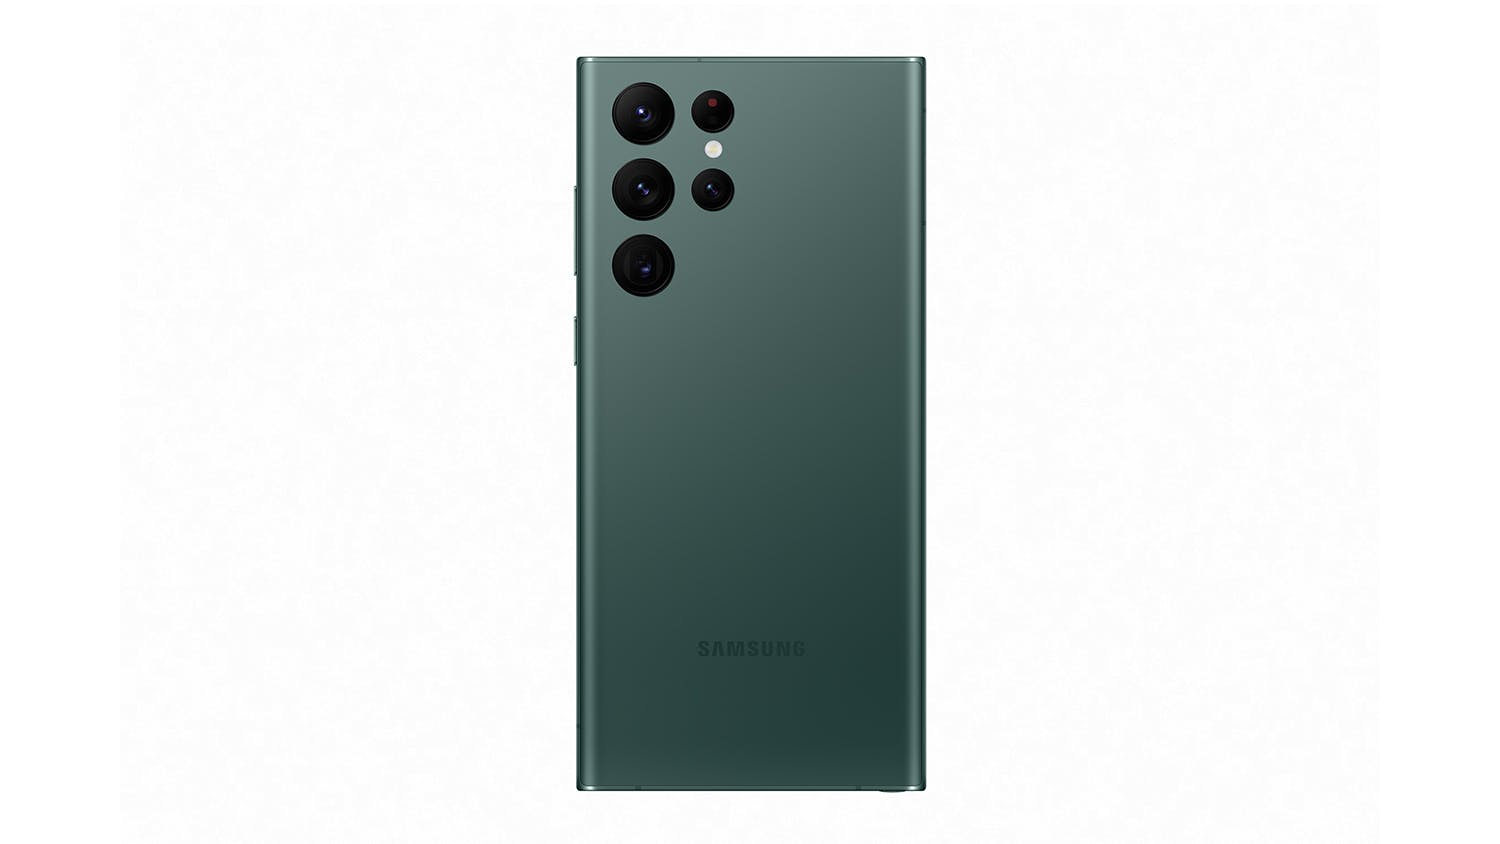 Samsung Galaxy S22 Ultra 5G 256GB Smartphone - Green (Spark/Open Network)